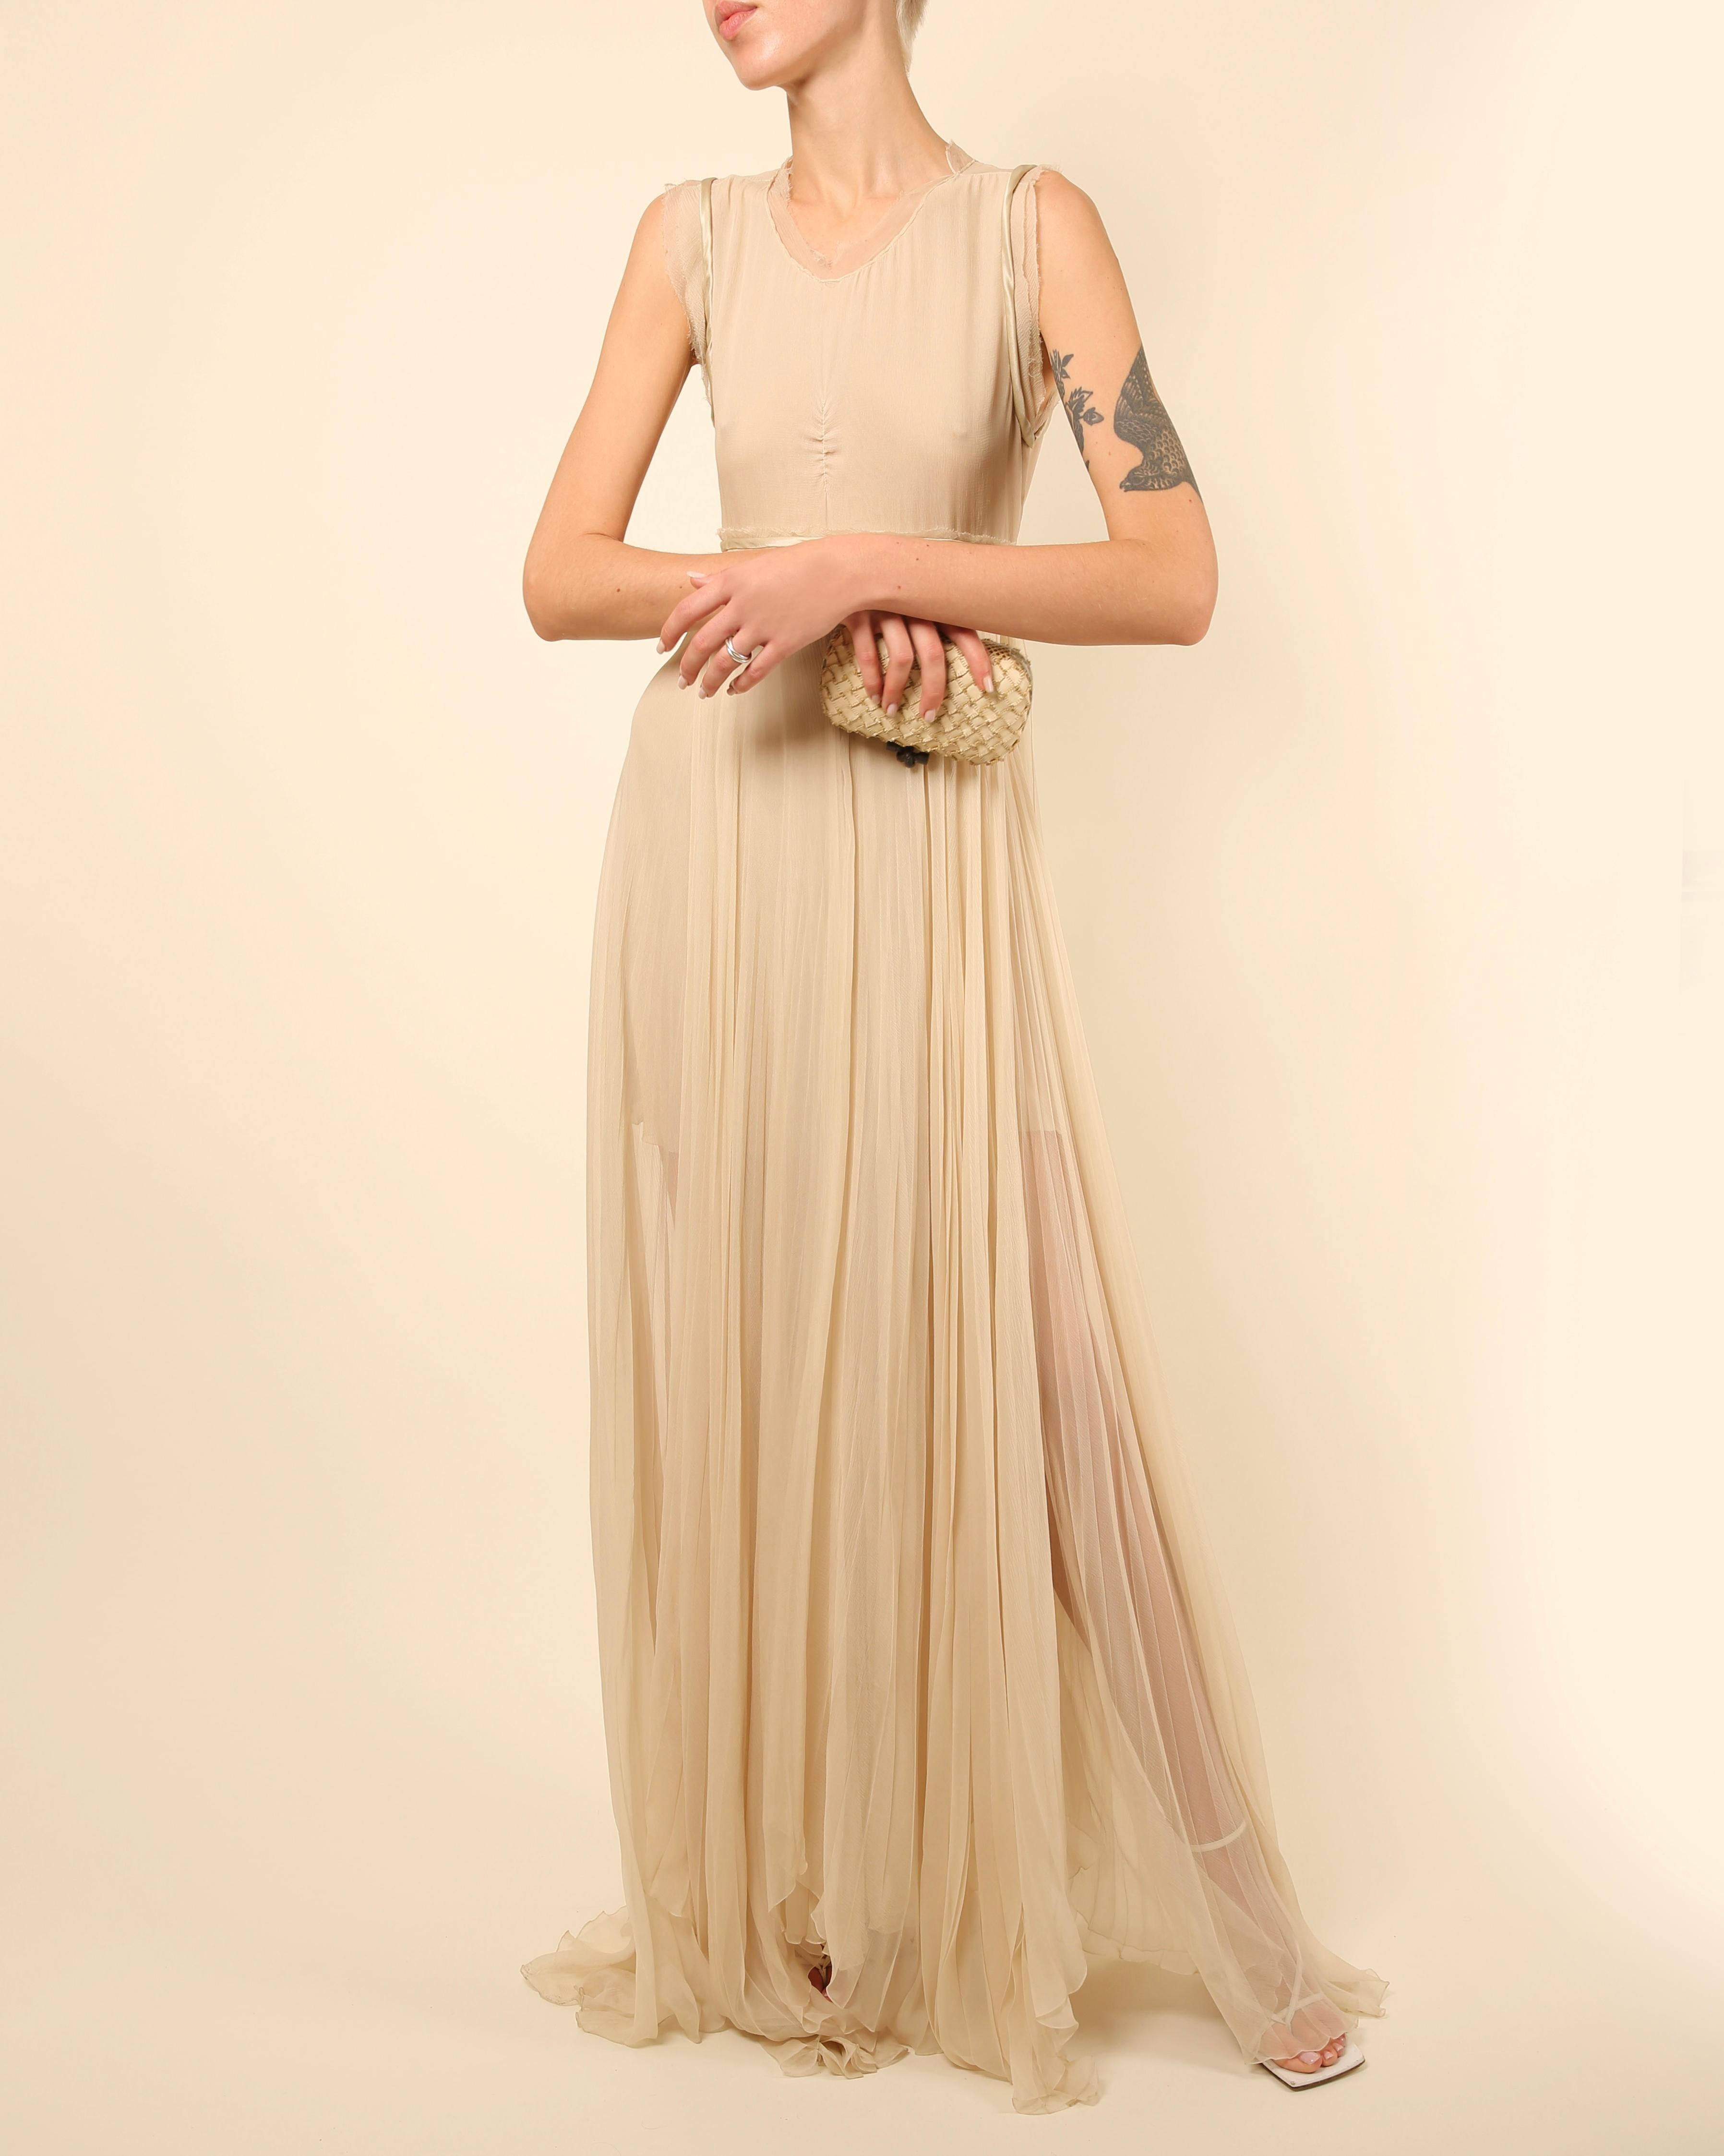 Women's Chloe S/S10 ivory white beige chiffon silk layered sleeveless wedding dress gown For Sale